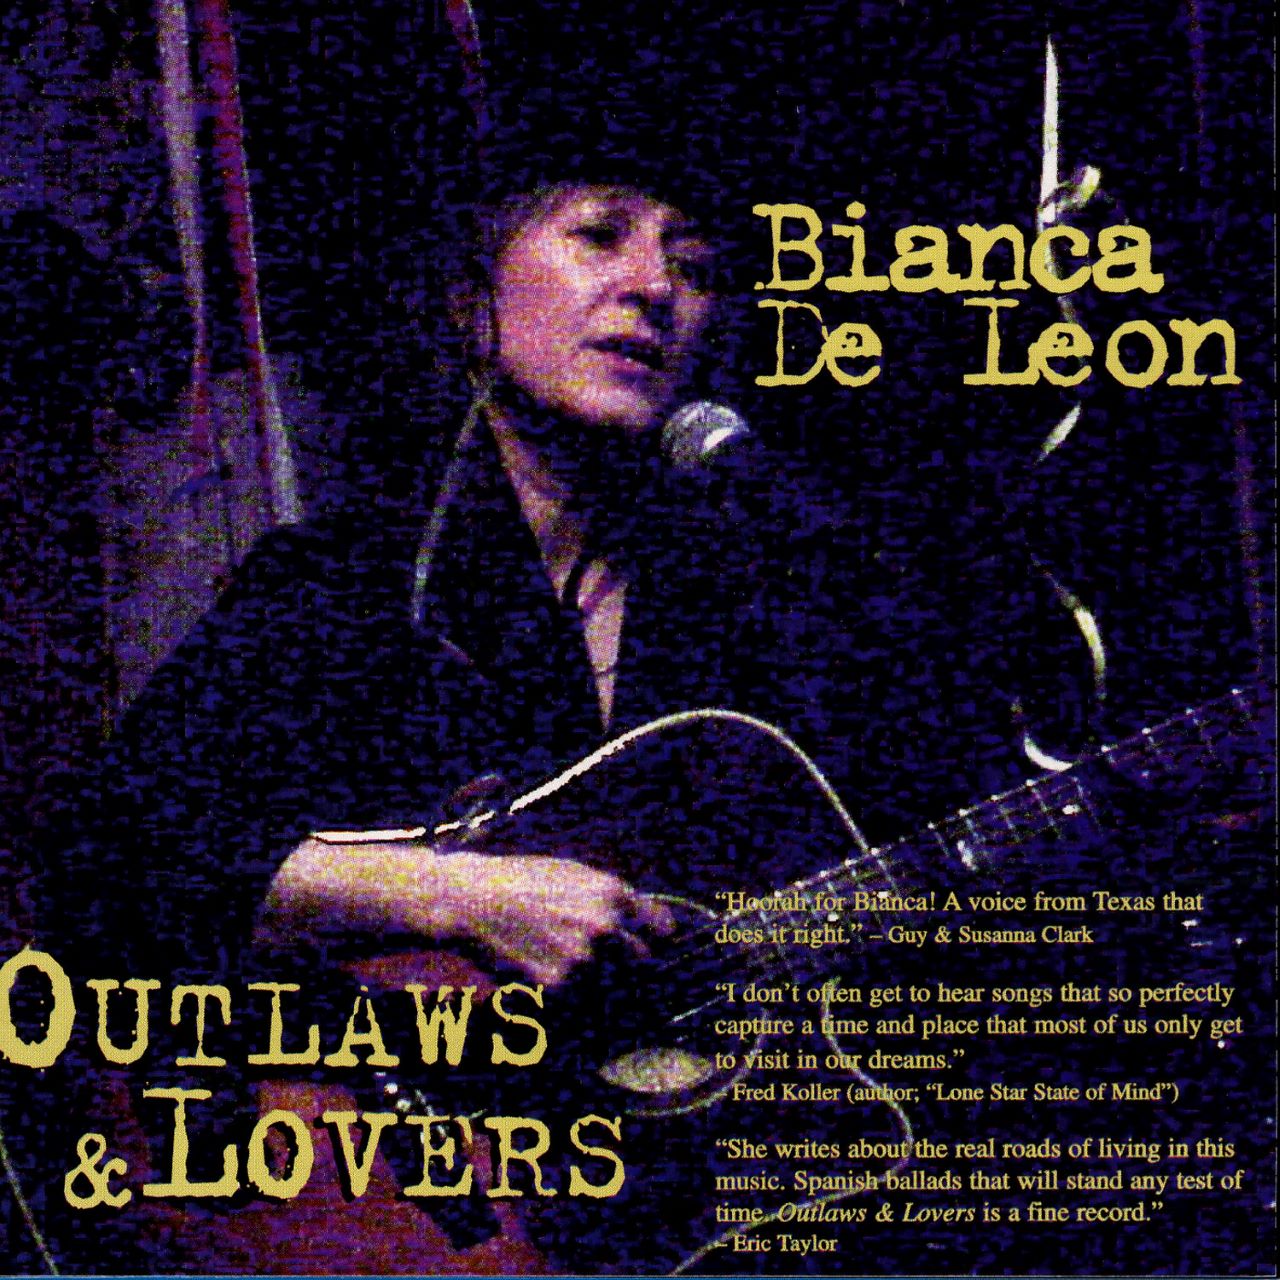 Bianca DeLeon - Outlaws & Lovers covewr album